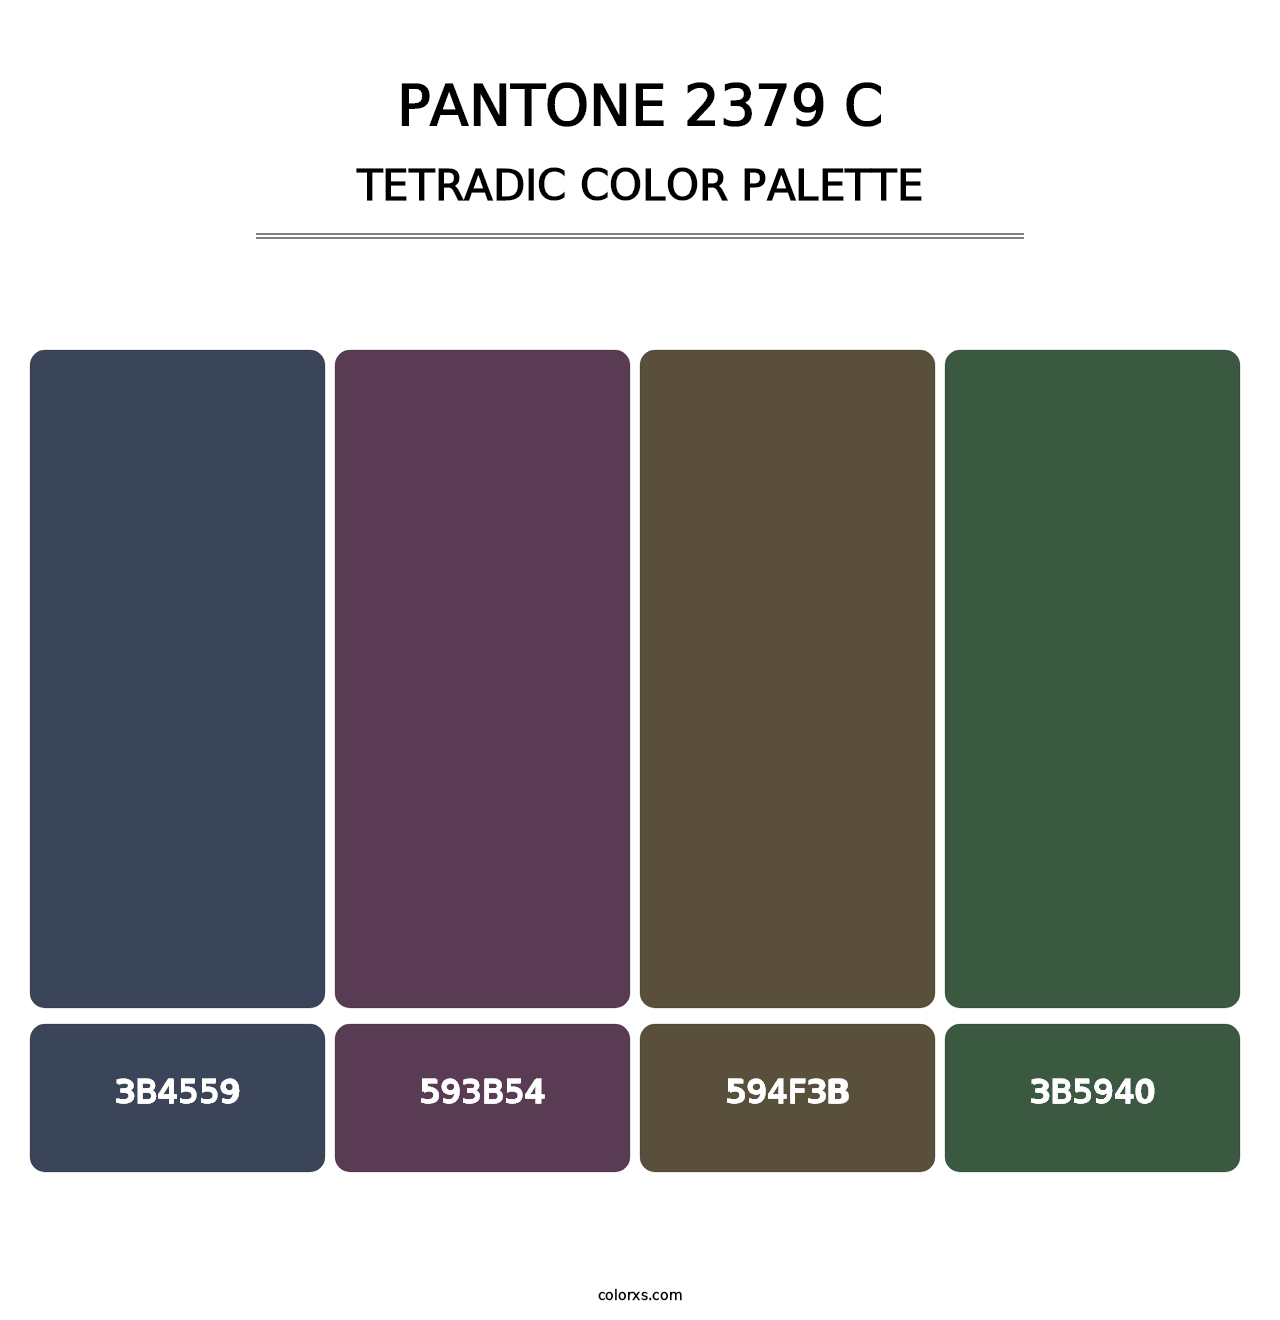 PANTONE 2379 C - Tetradic Color Palette